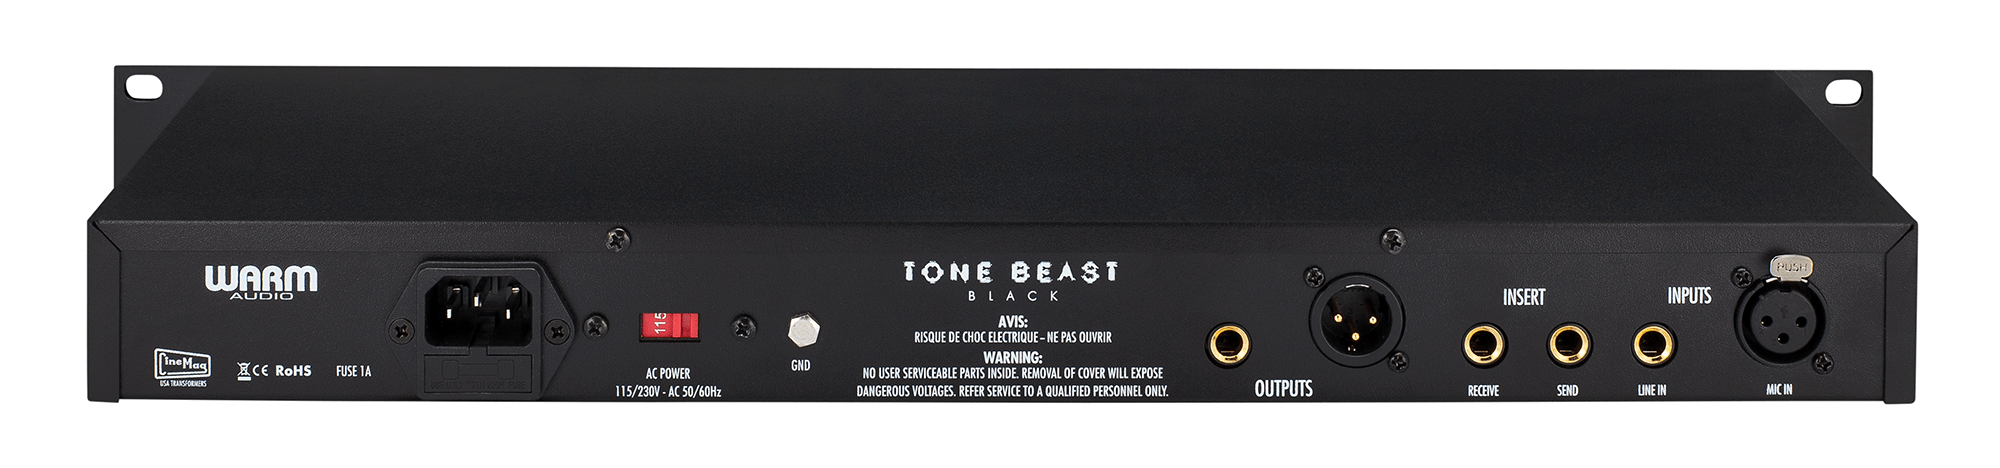 Warm Audio TB12 Black по цене 90 000 ₽